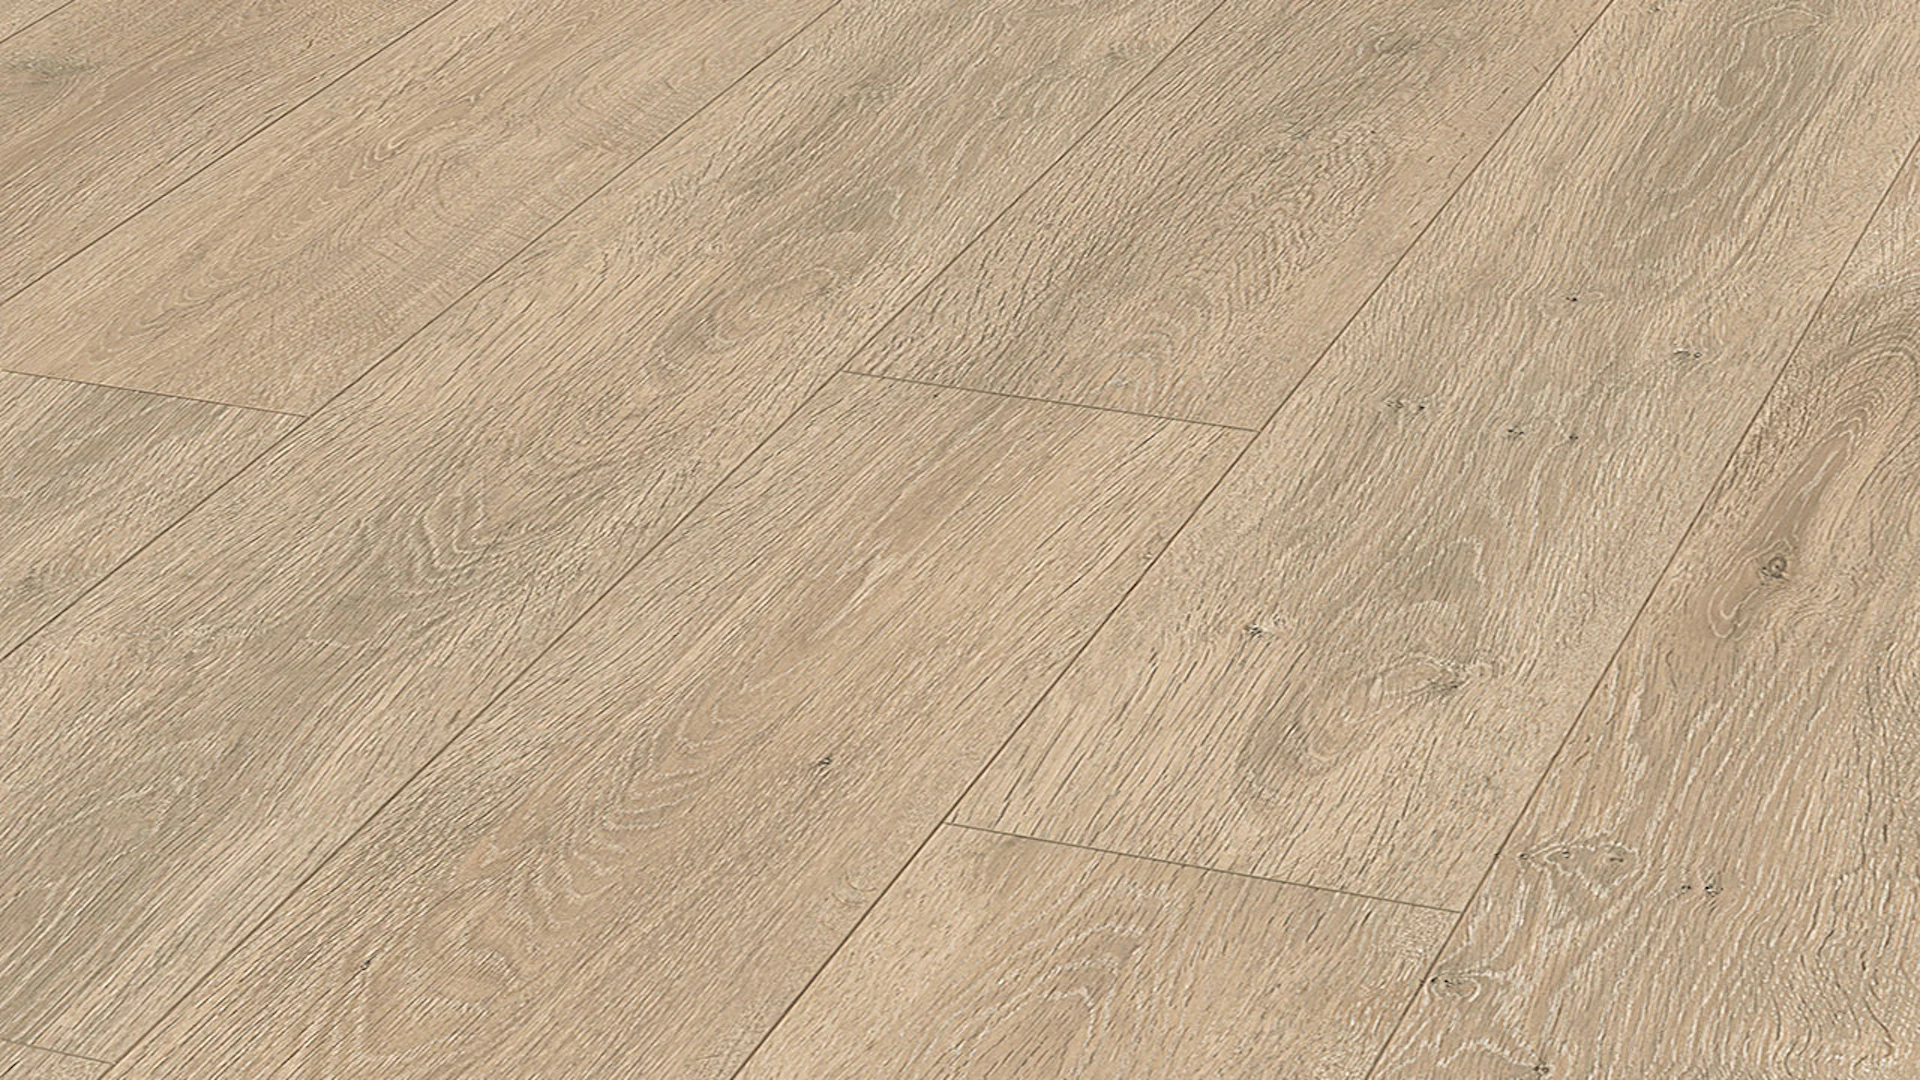 MEISTER Laminate flooring - MeisterDesign LD 150 Oak Caledonia 6421 (600017-1288198-06421)